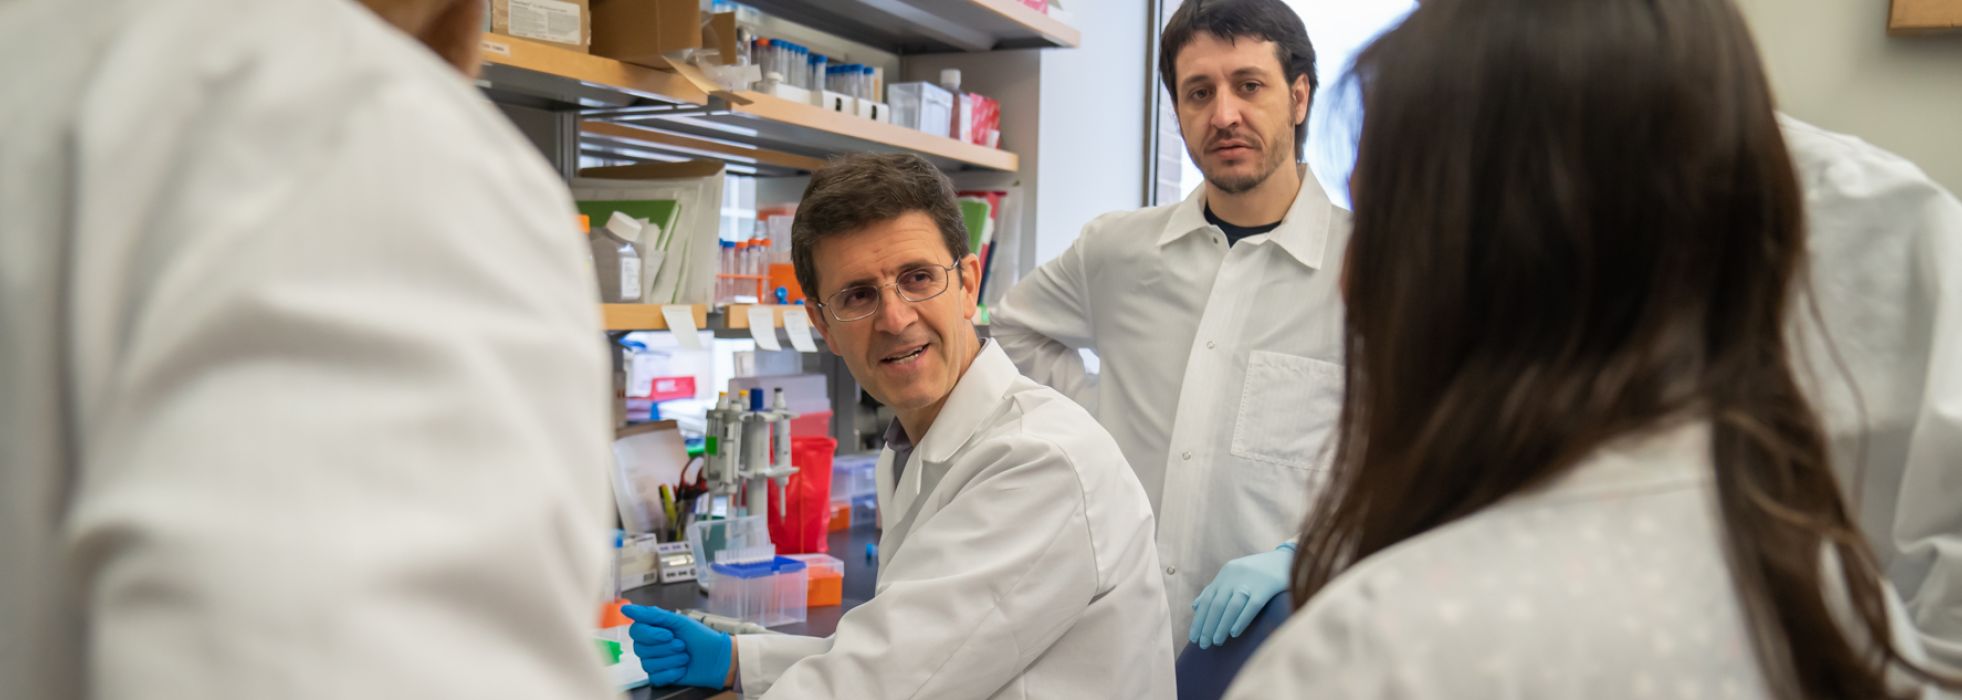 Dr. Luigi Puglielli talks with researchers in the lab